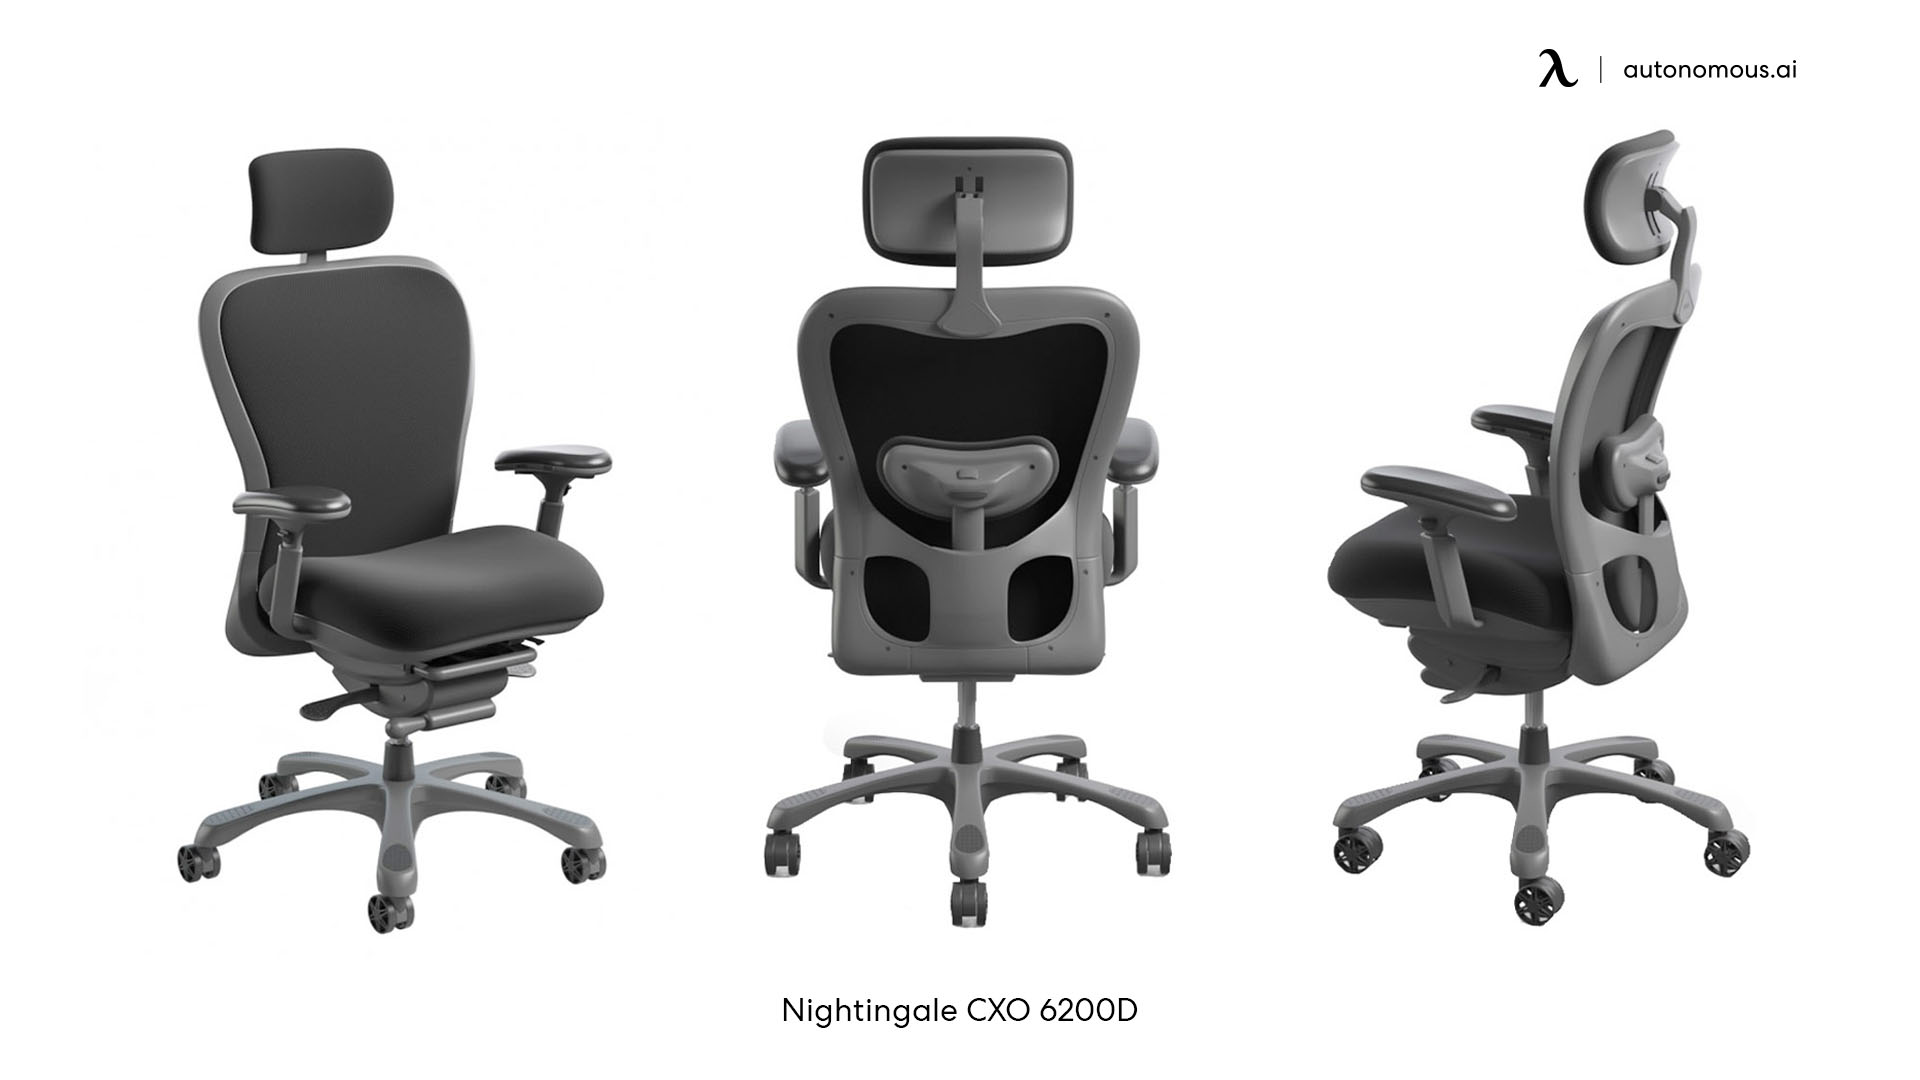 Nightingale CXO mesh office chair